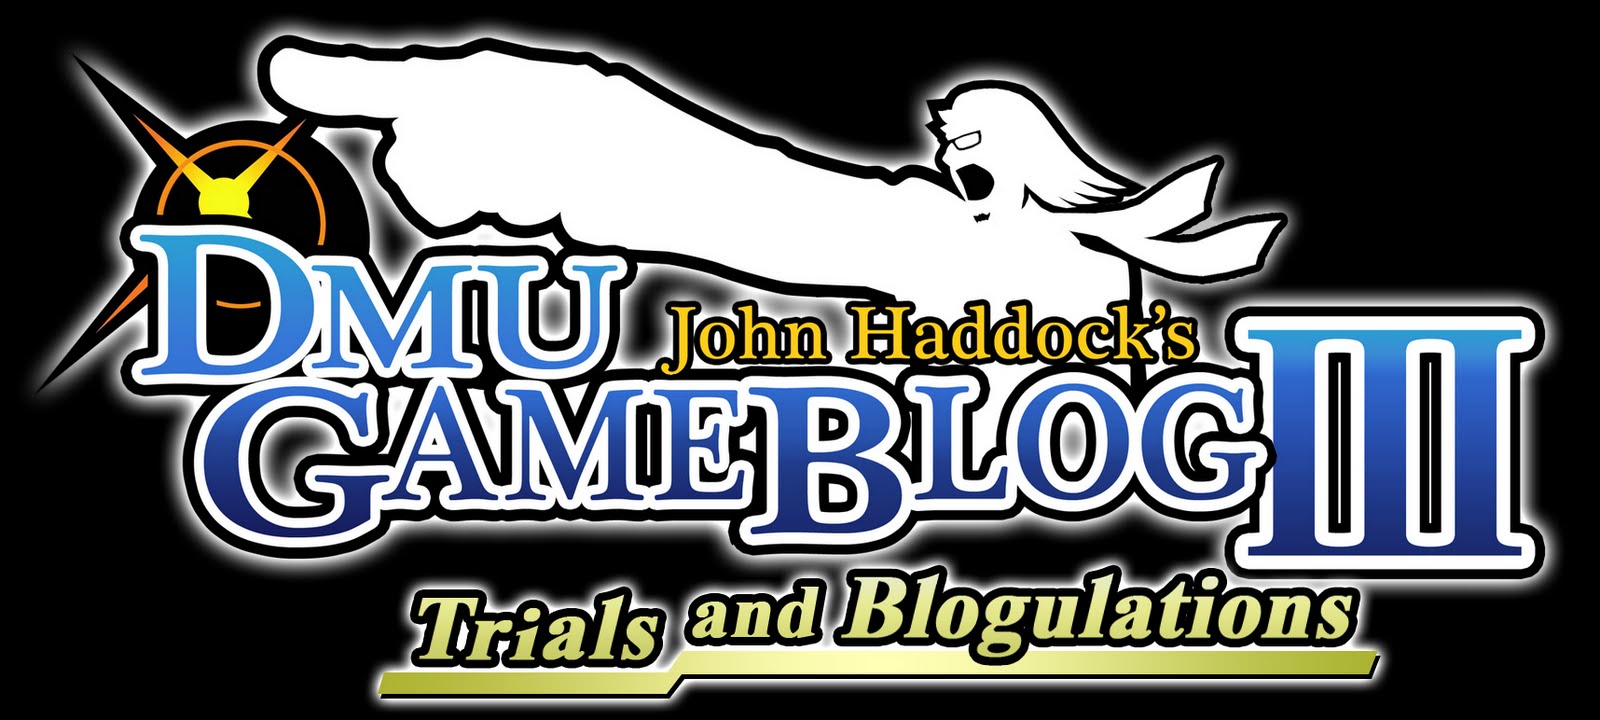 John Haddock's DMU Game Blog : Year 3